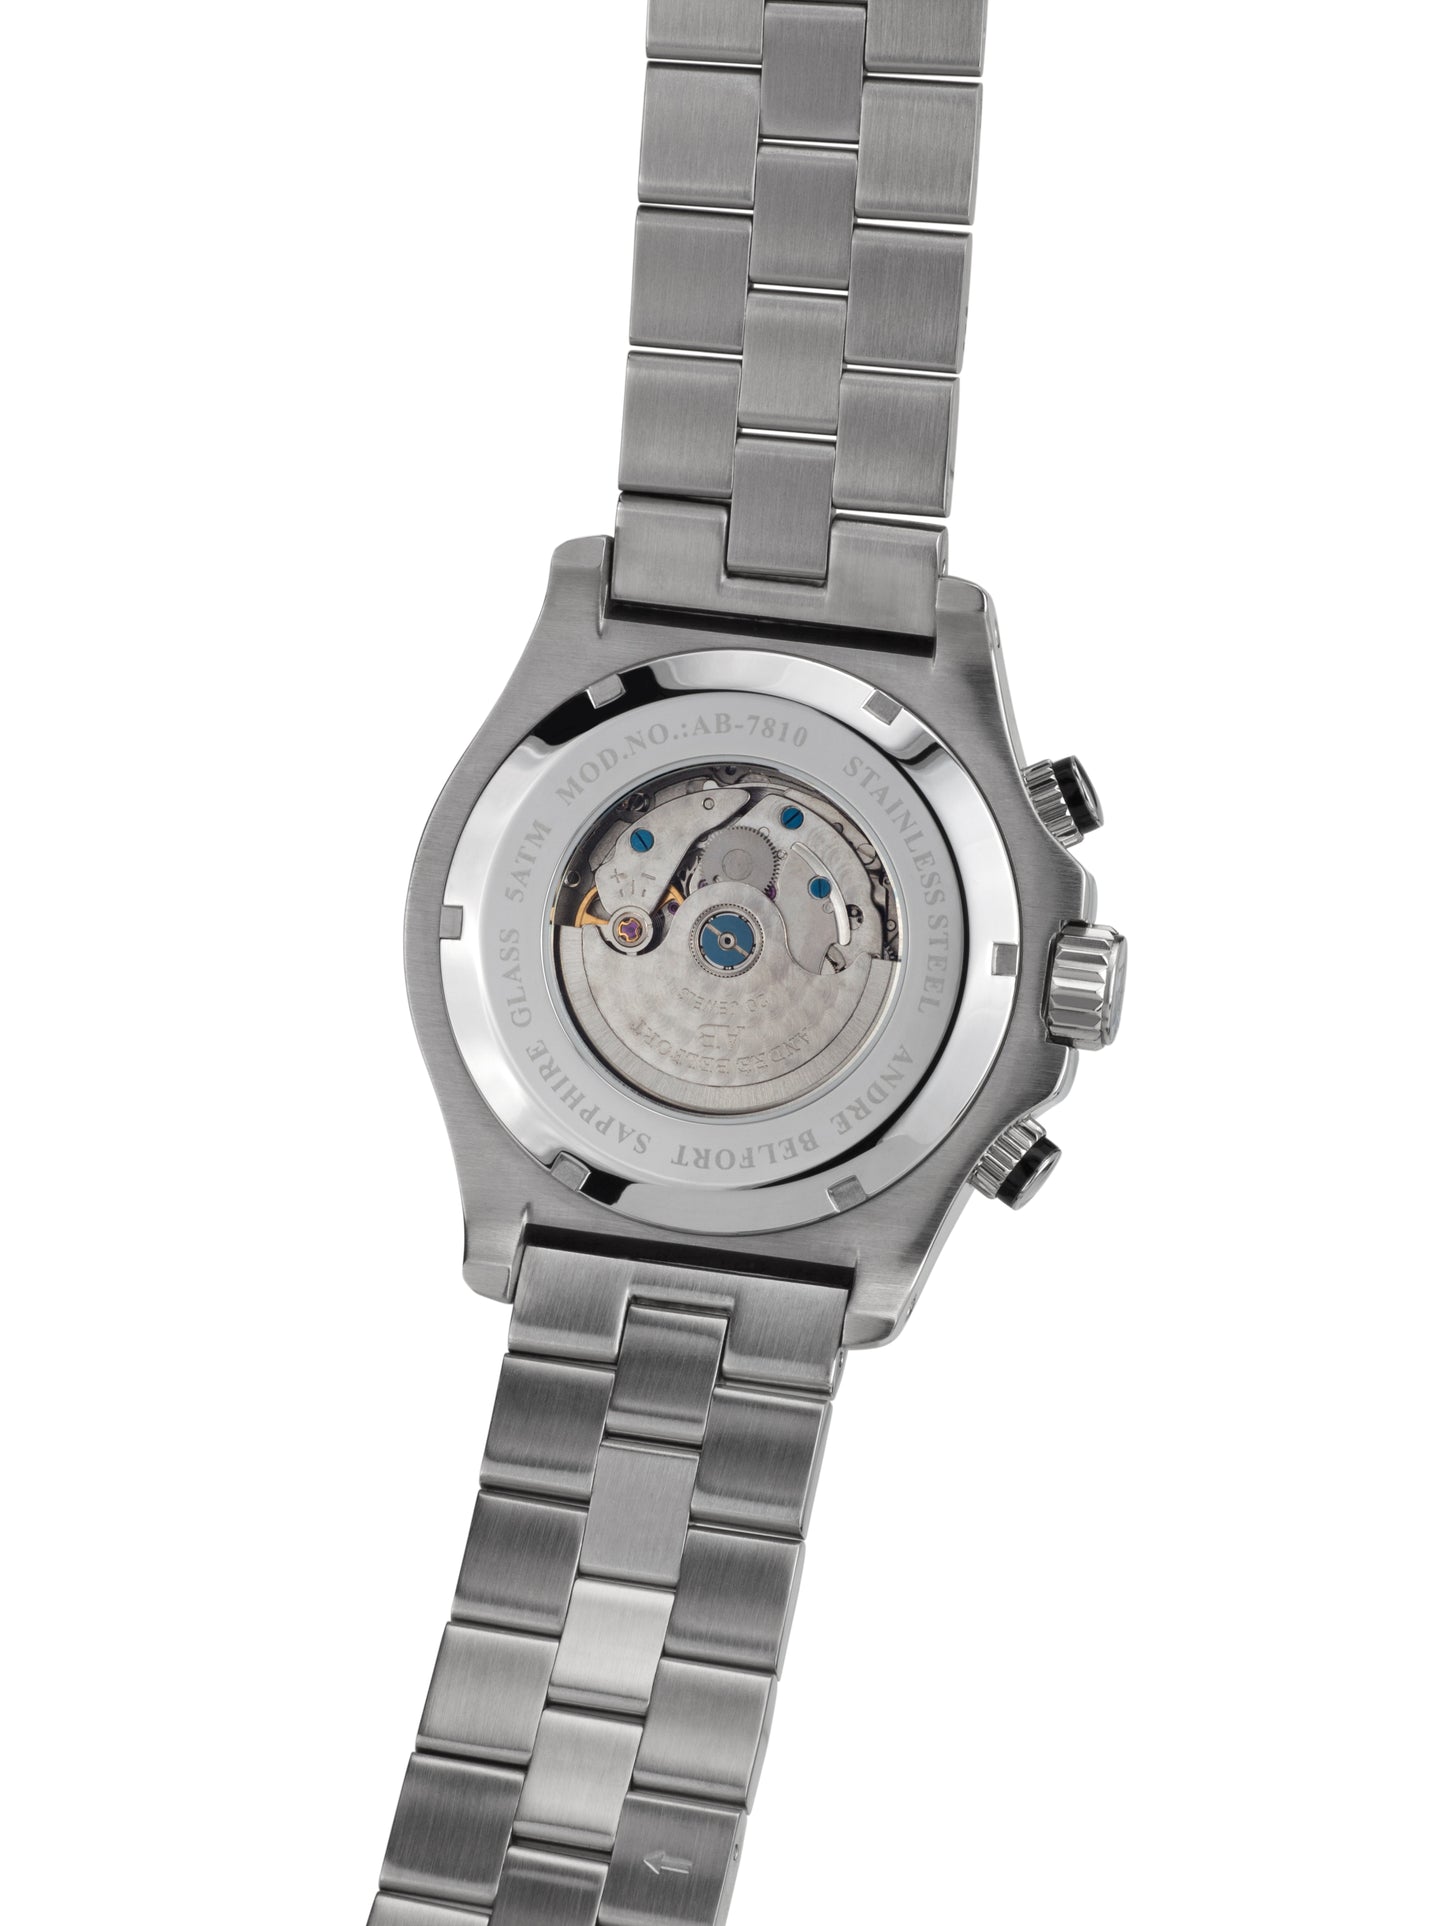 Automatic watches — Le Commandant — André Belfort — steel silver